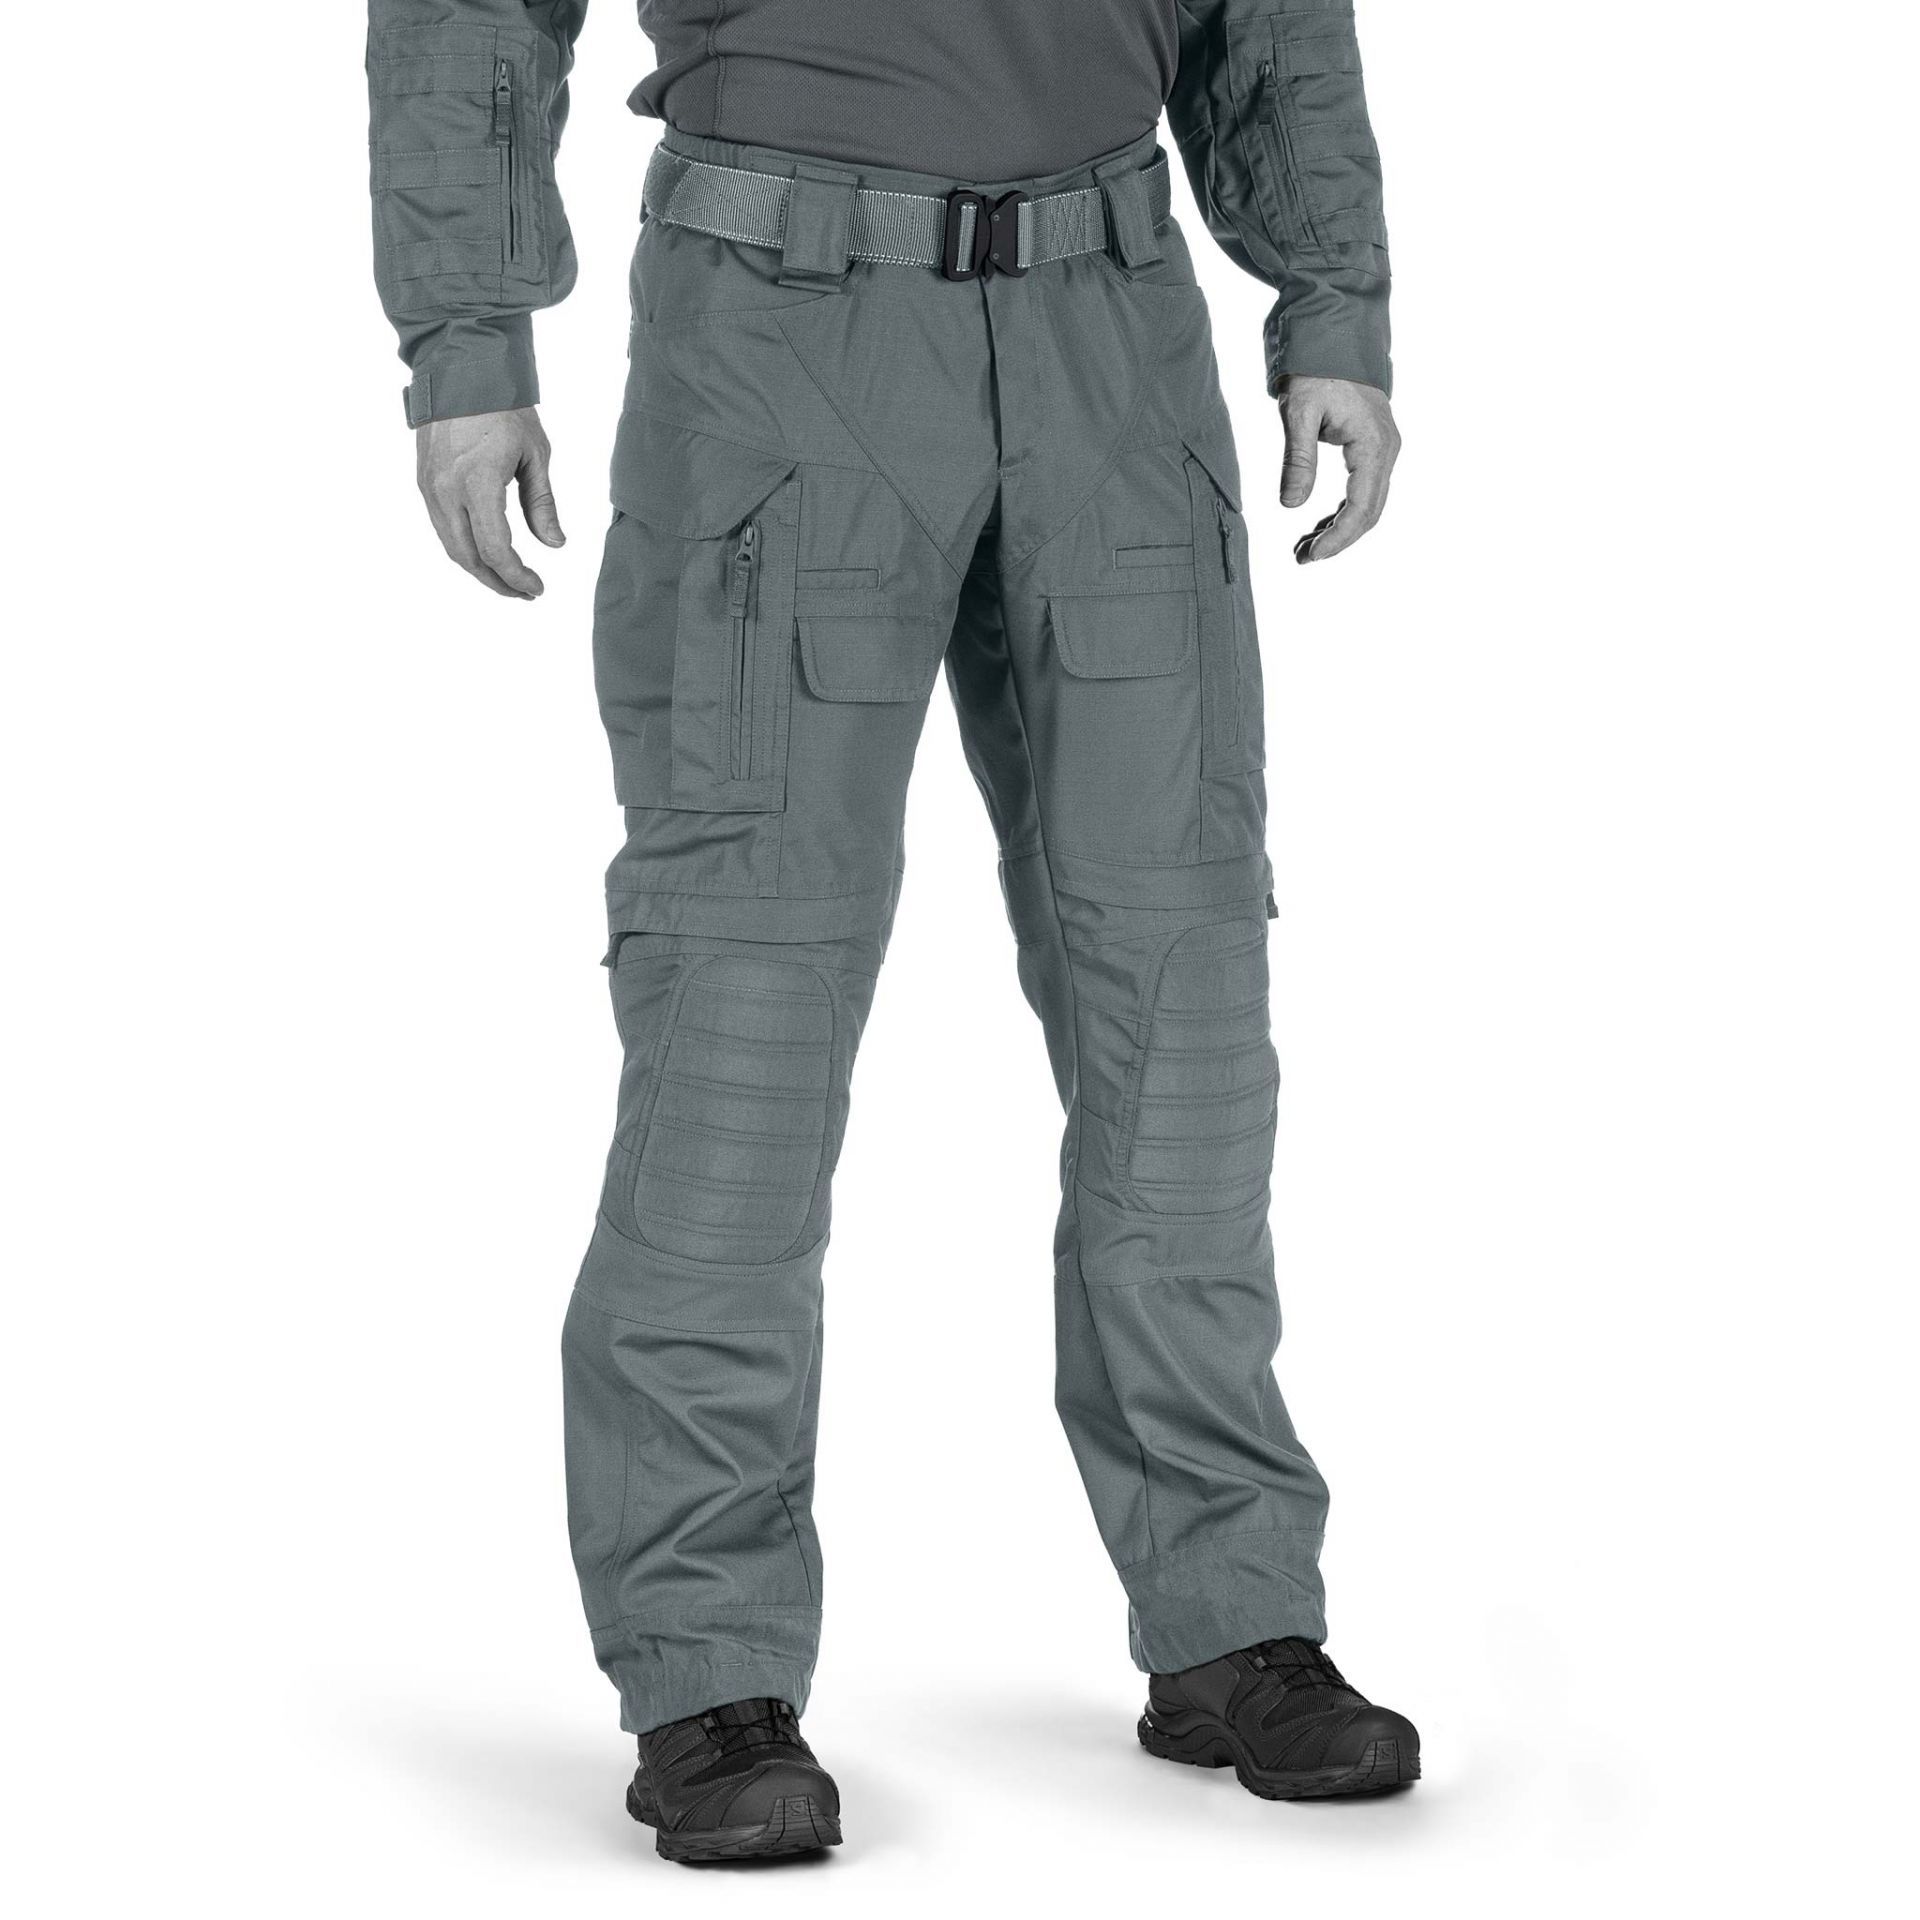 STRIKER X COMBAT PANTS – Tier One Uniforms